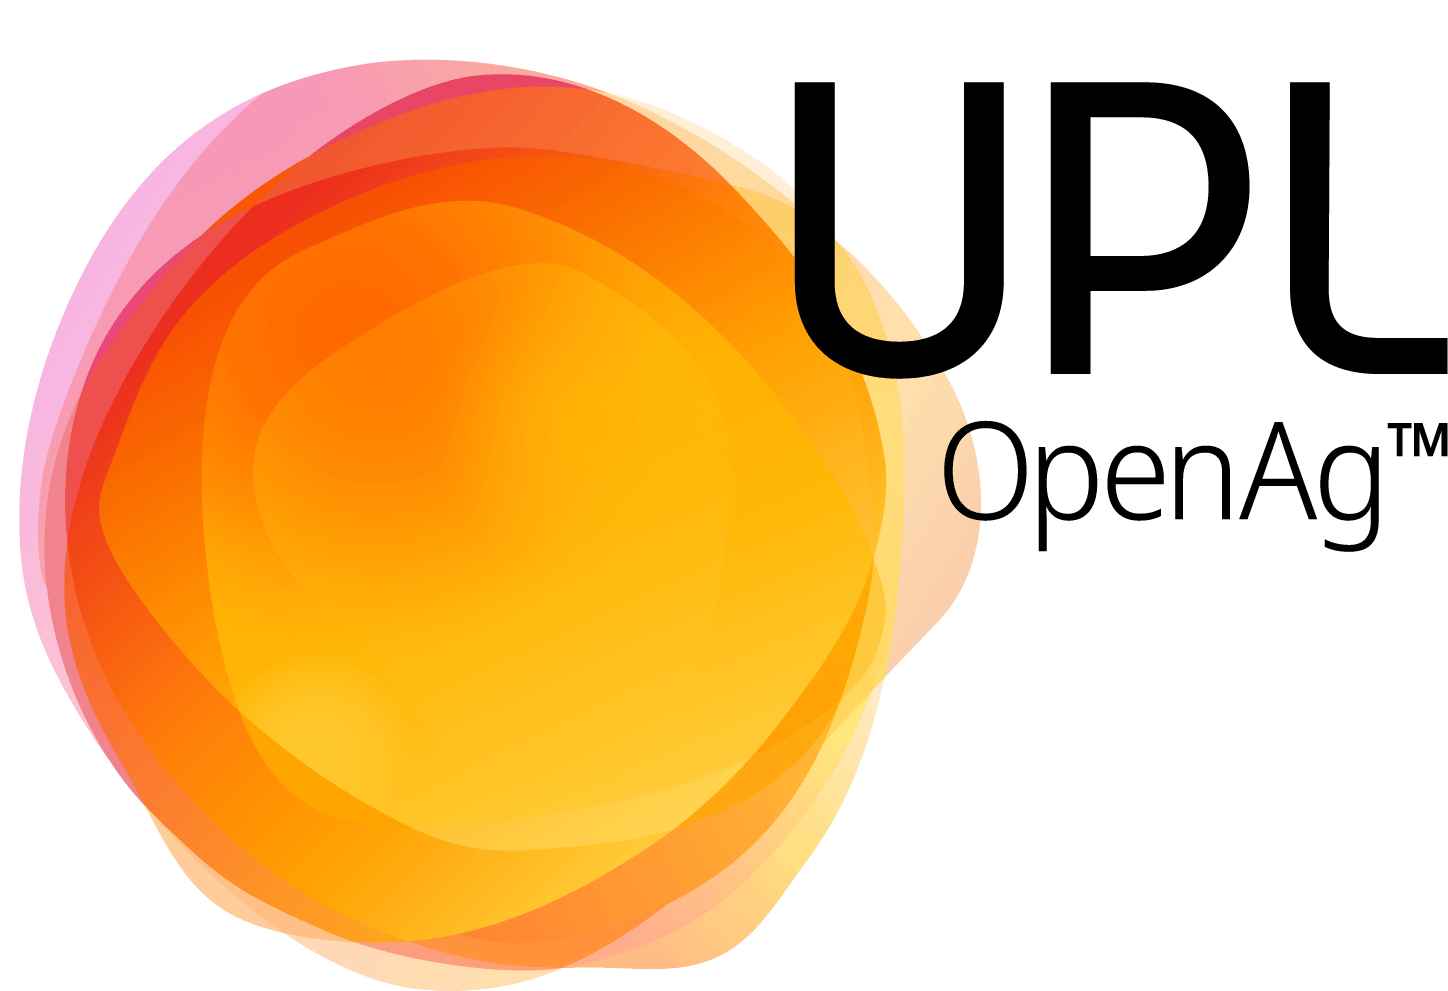 Logo UPL